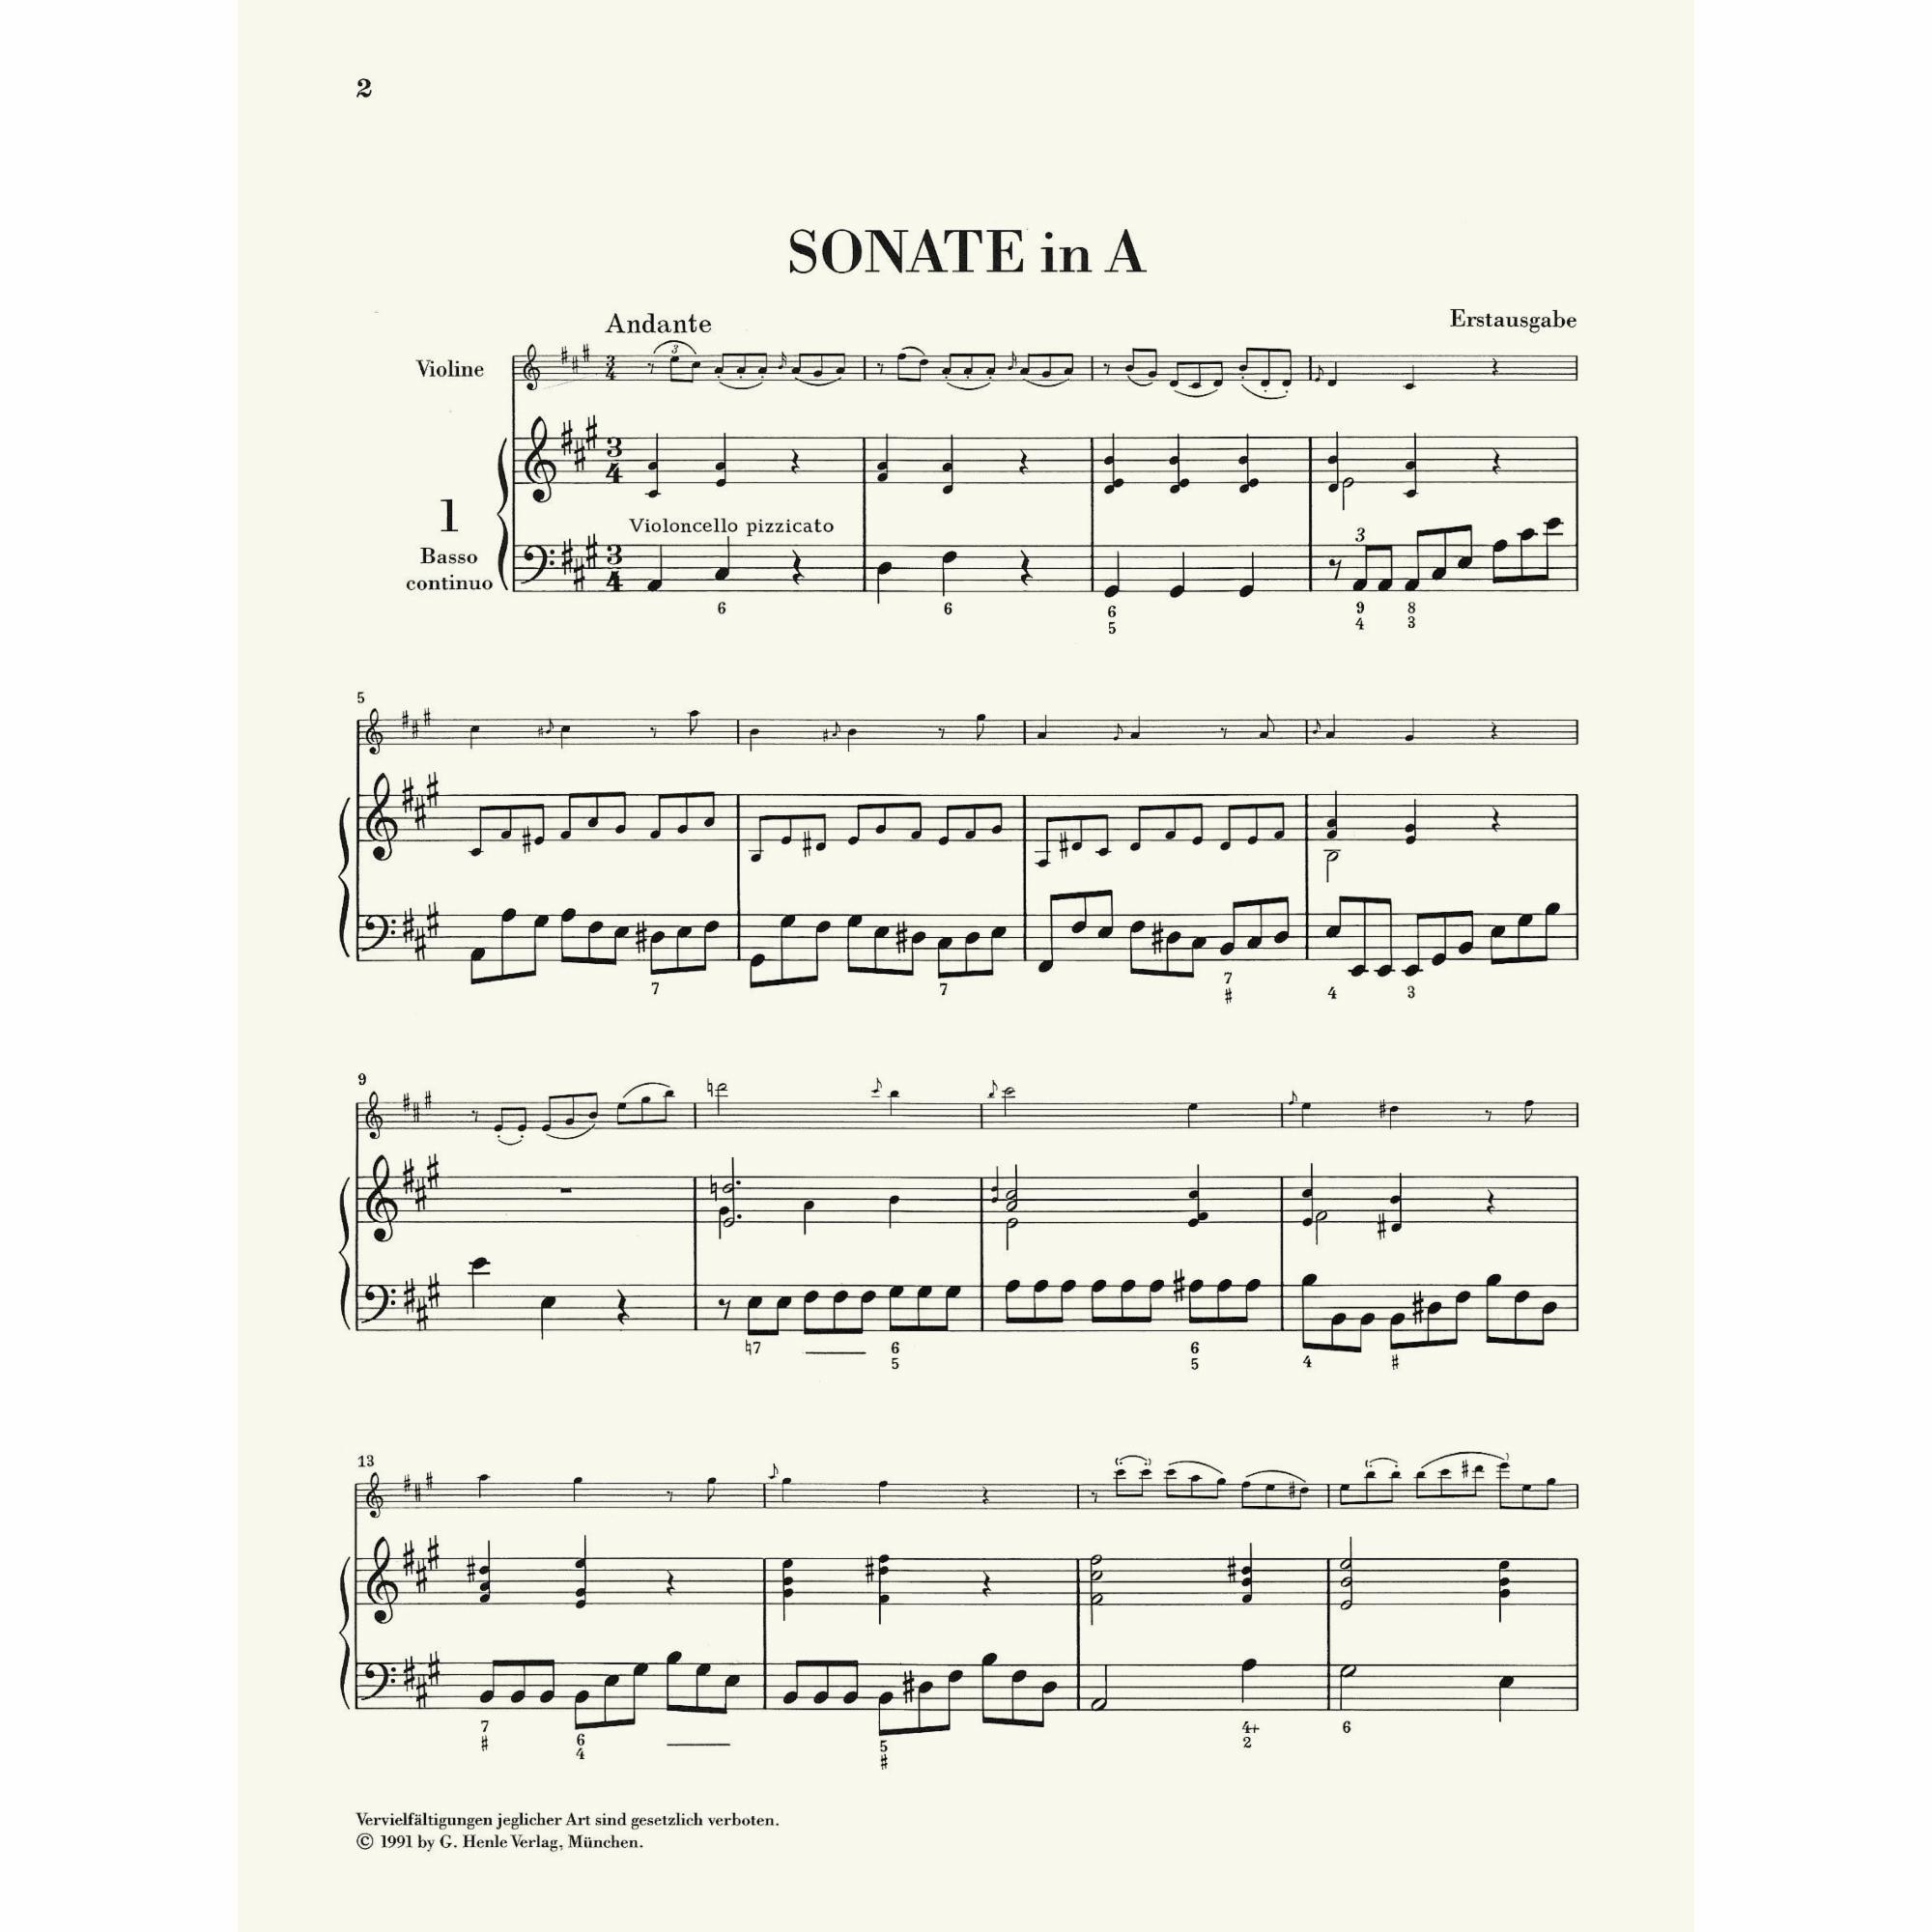 Sample: Piano (Pg. 2)